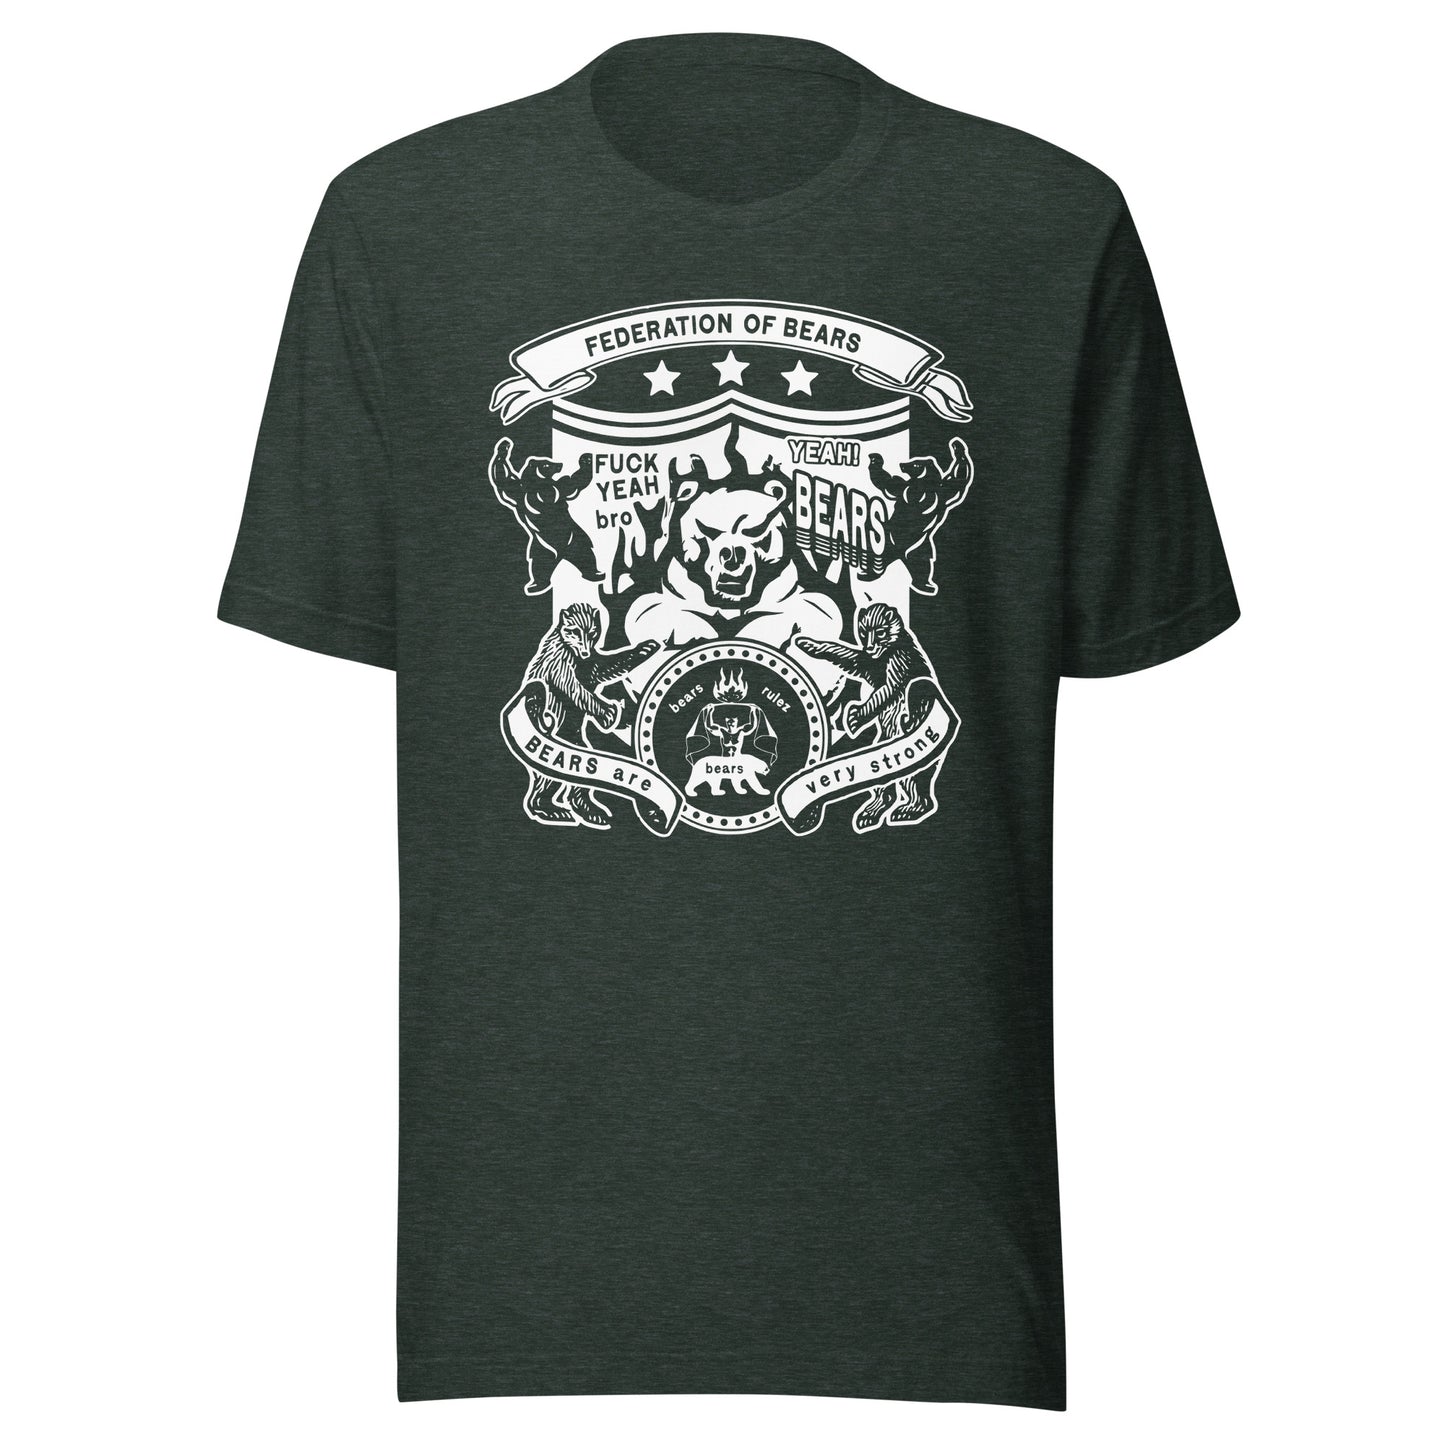 "Federation of Bears" Unisex t-shirt